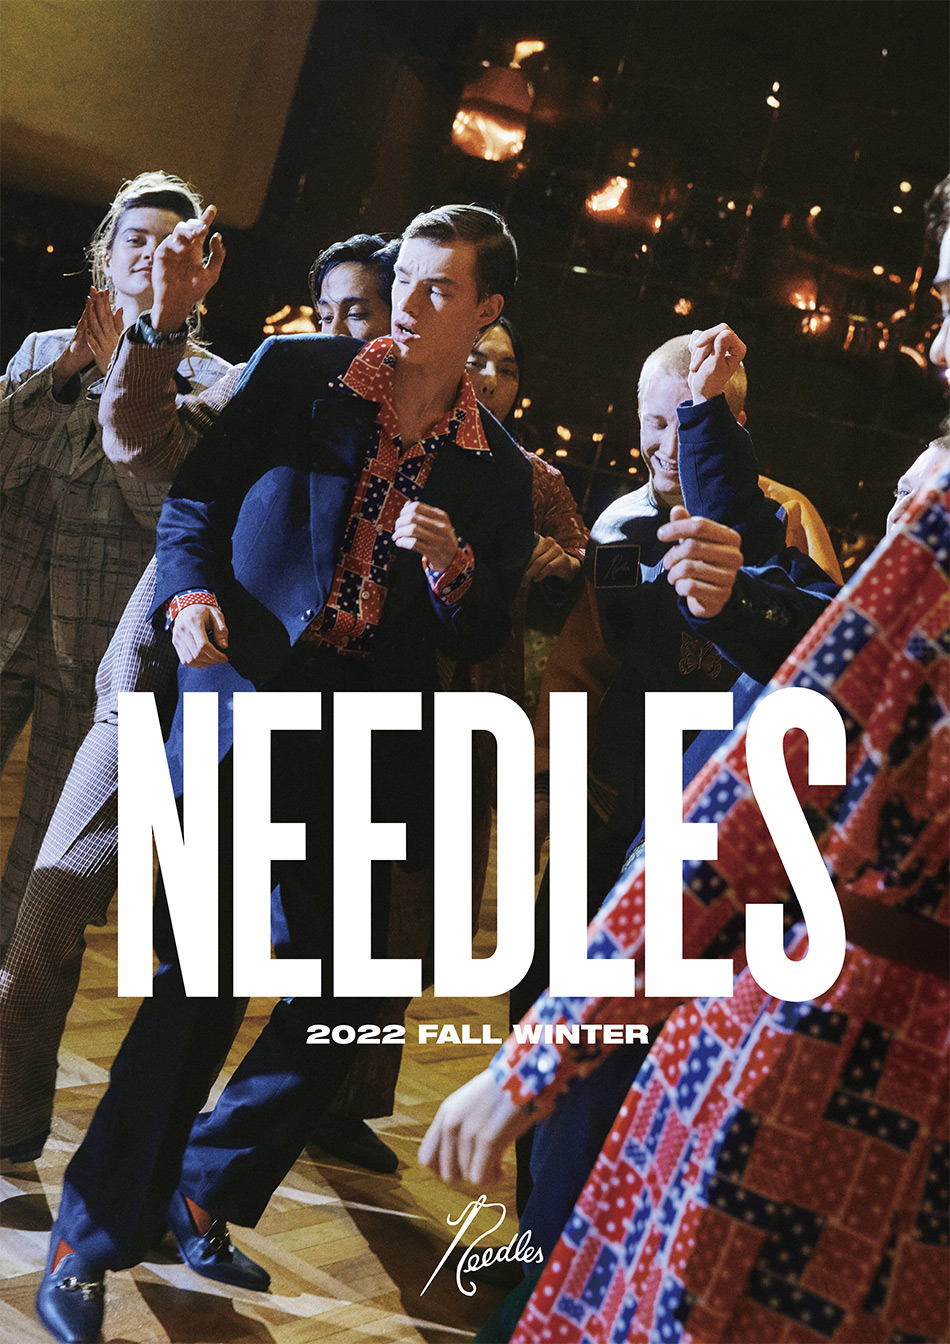 Needles 2022 Fall Winter